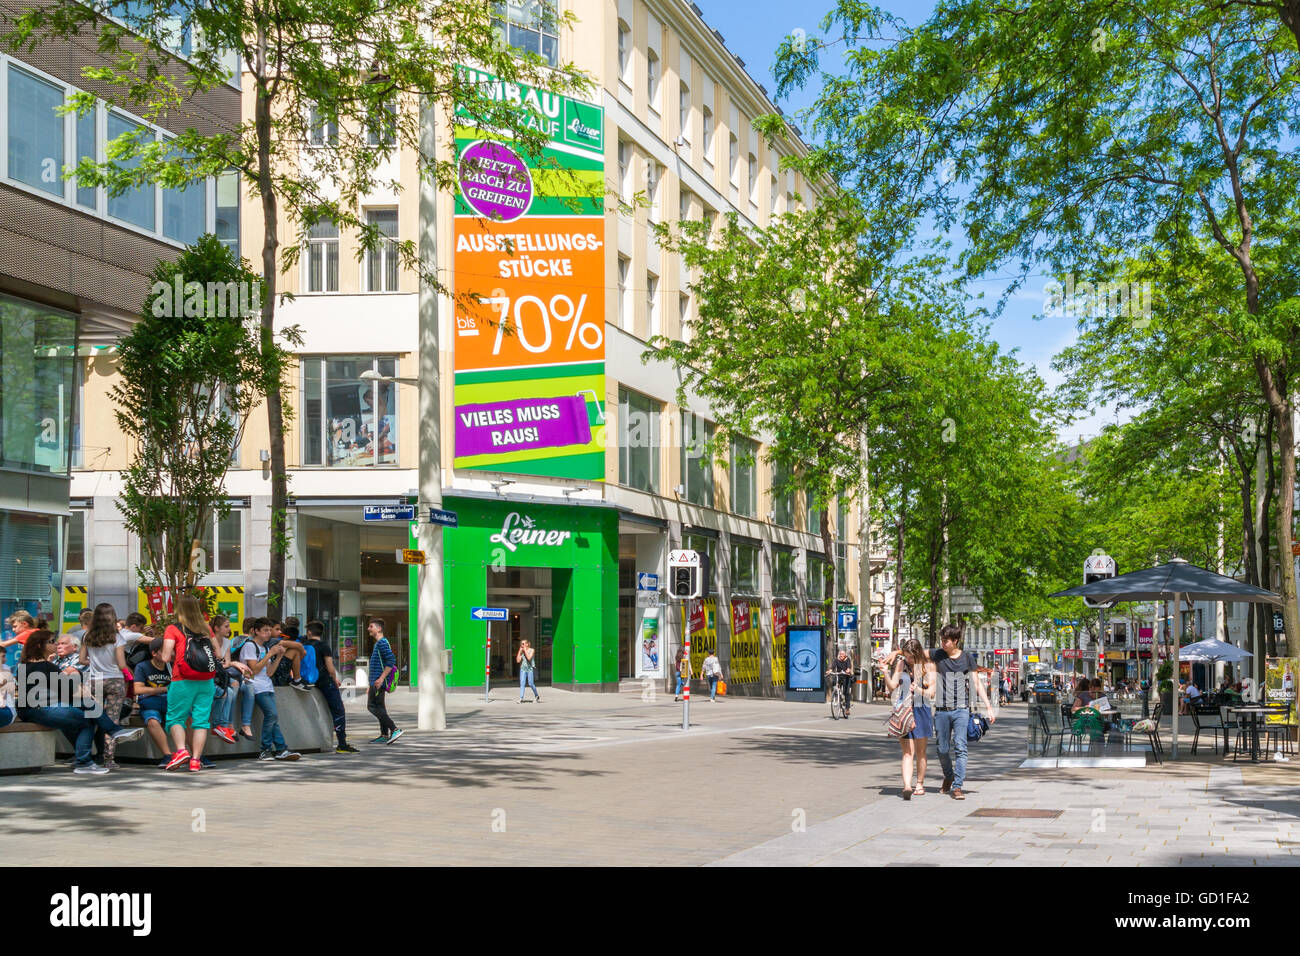 Leiner shop e persone in via commerciale Mariahilfer Strasse a Vienna, in Austria Foto Stock